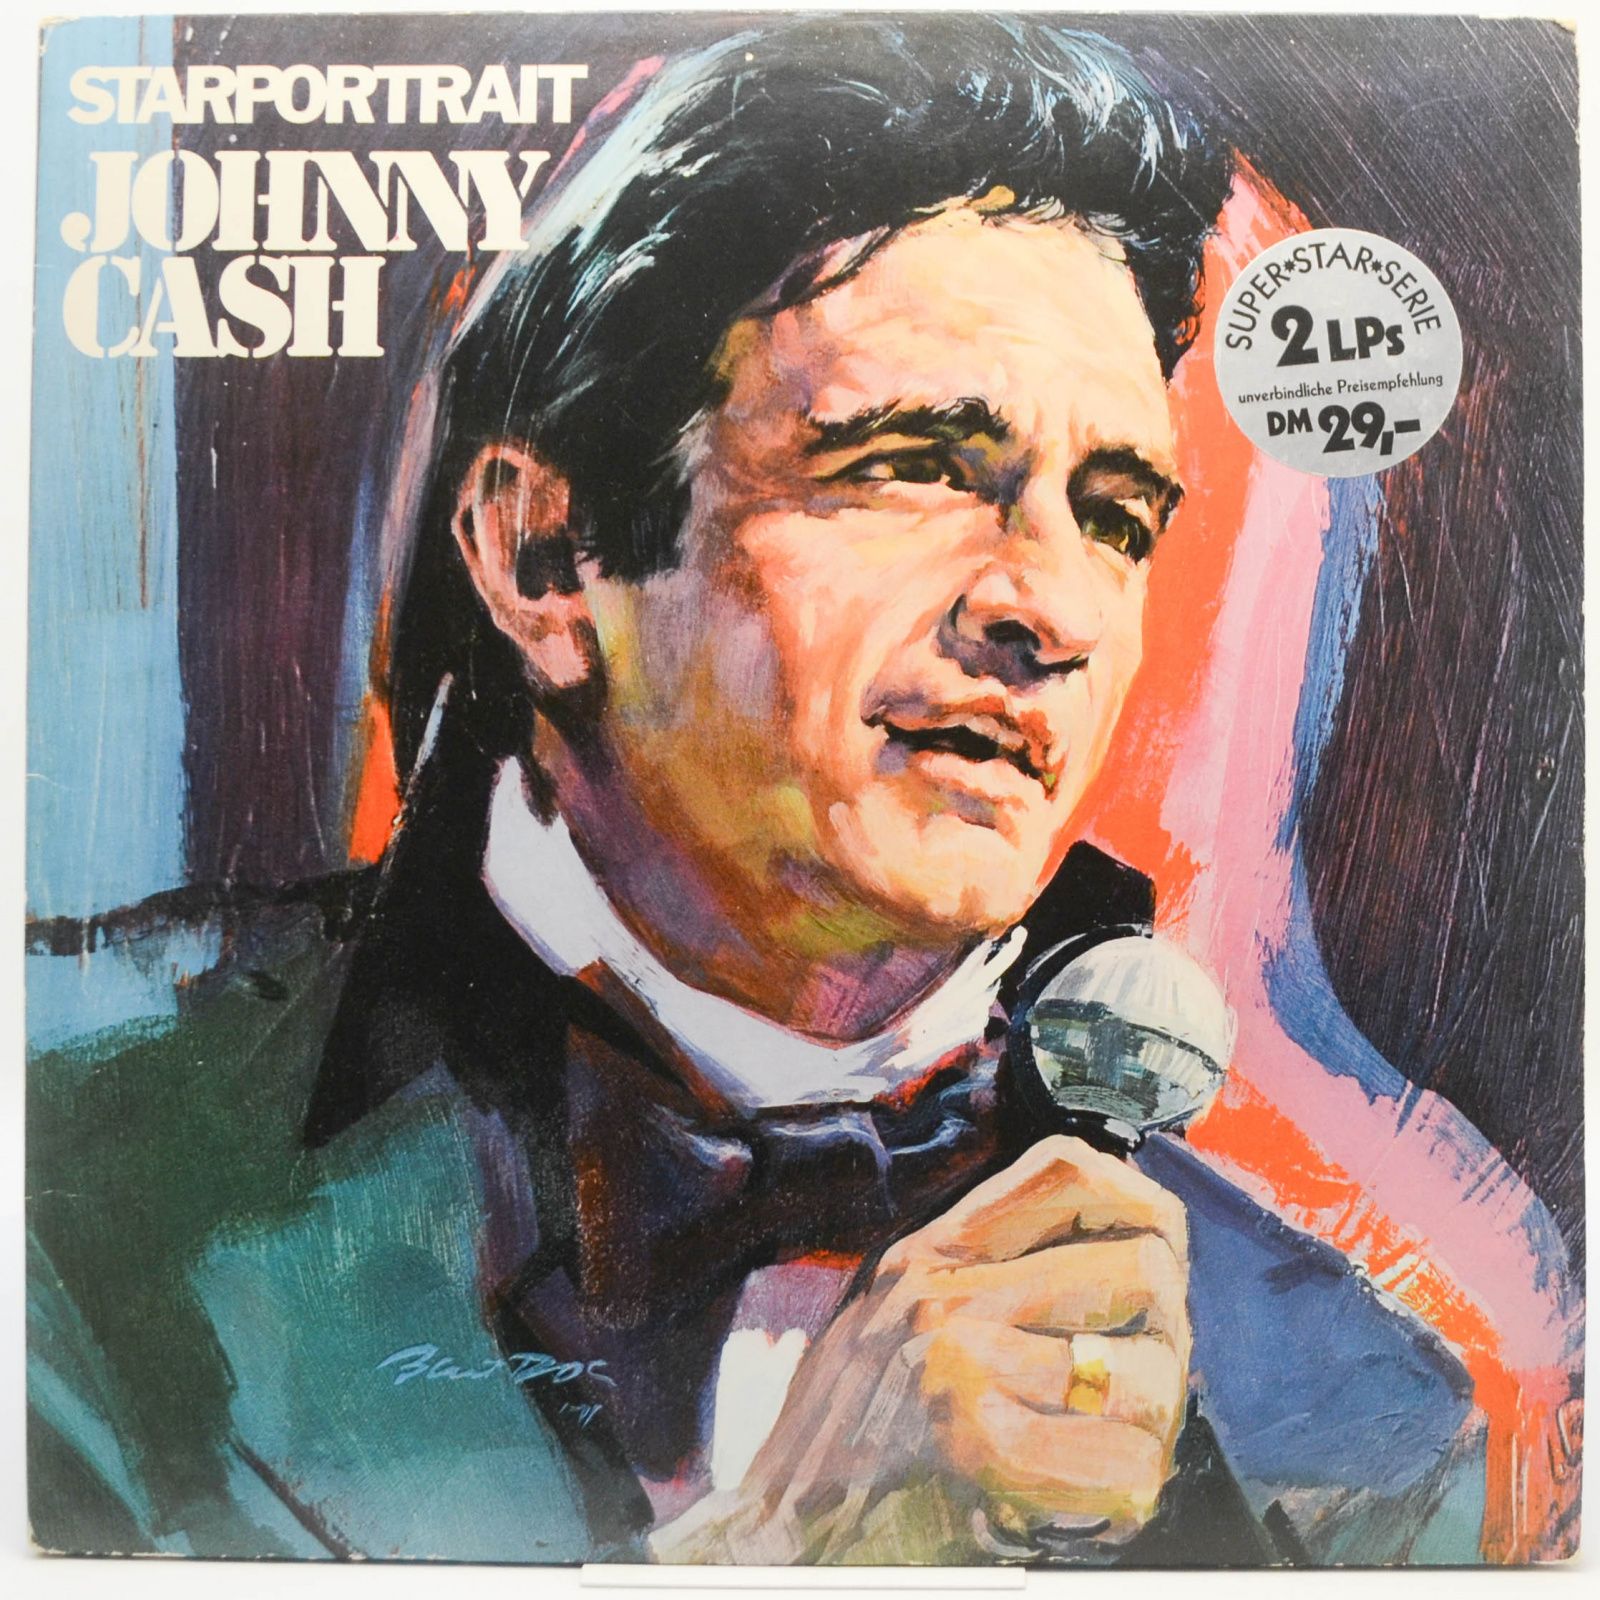 Johnny Cash — Starportrait, 1971